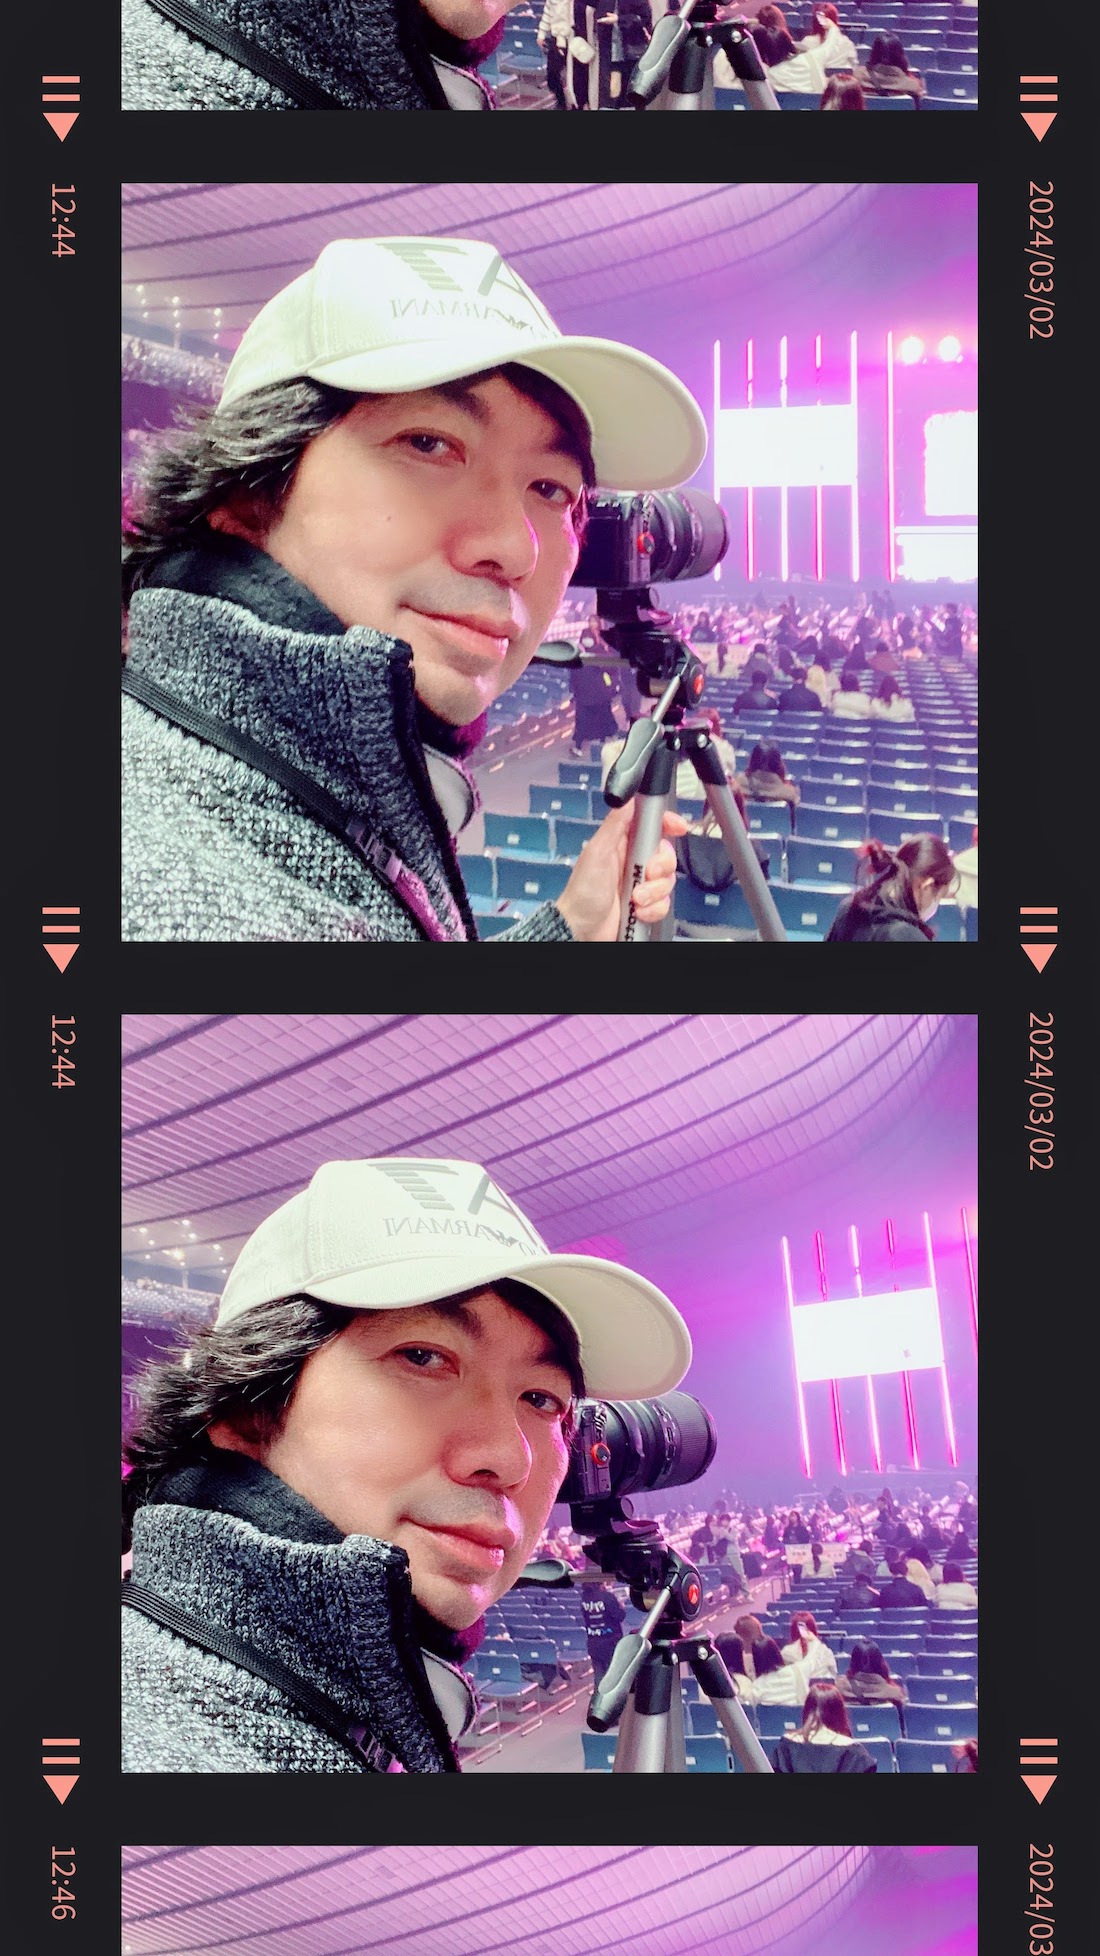 SHUN（カメラマン）20204年3月2日、国立代々木競技場 第一体育館のカメラ台にて。